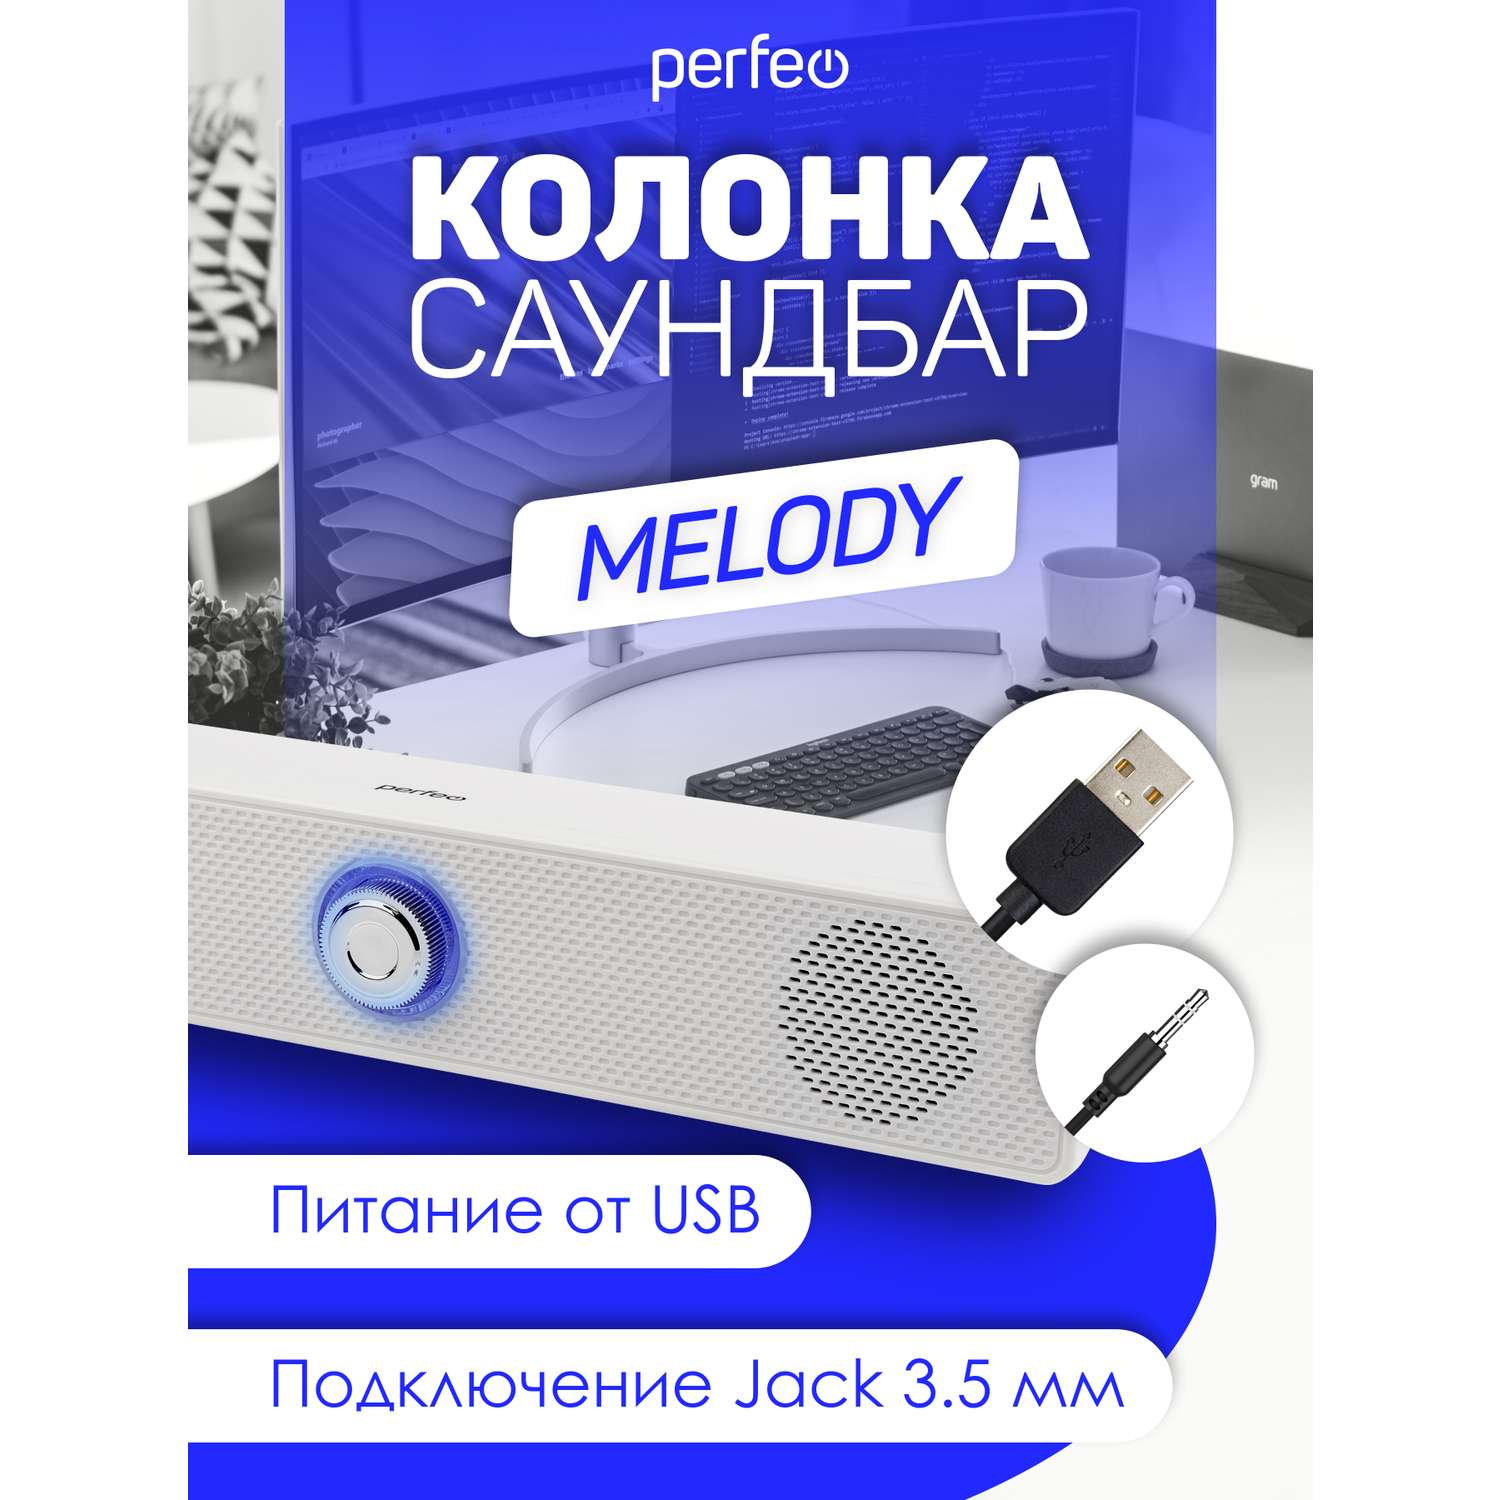 Колонка-саундбар Perfeo компьютерная MELODY мощность 6 Вт USB пластик белый - фото 4